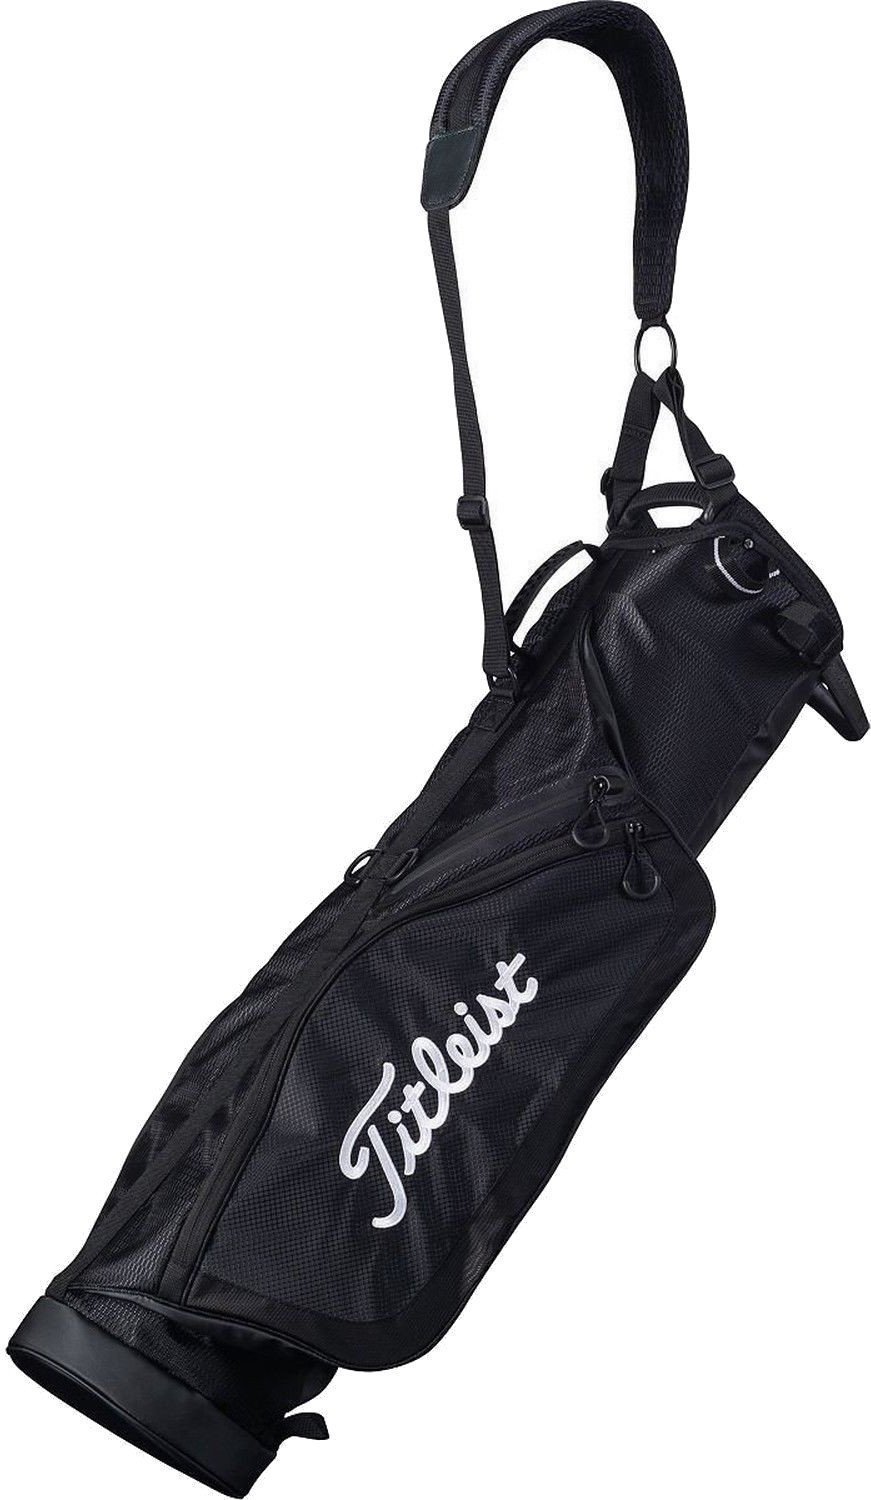 Pencilbag Titleist Premium Carry Bag Black Crst